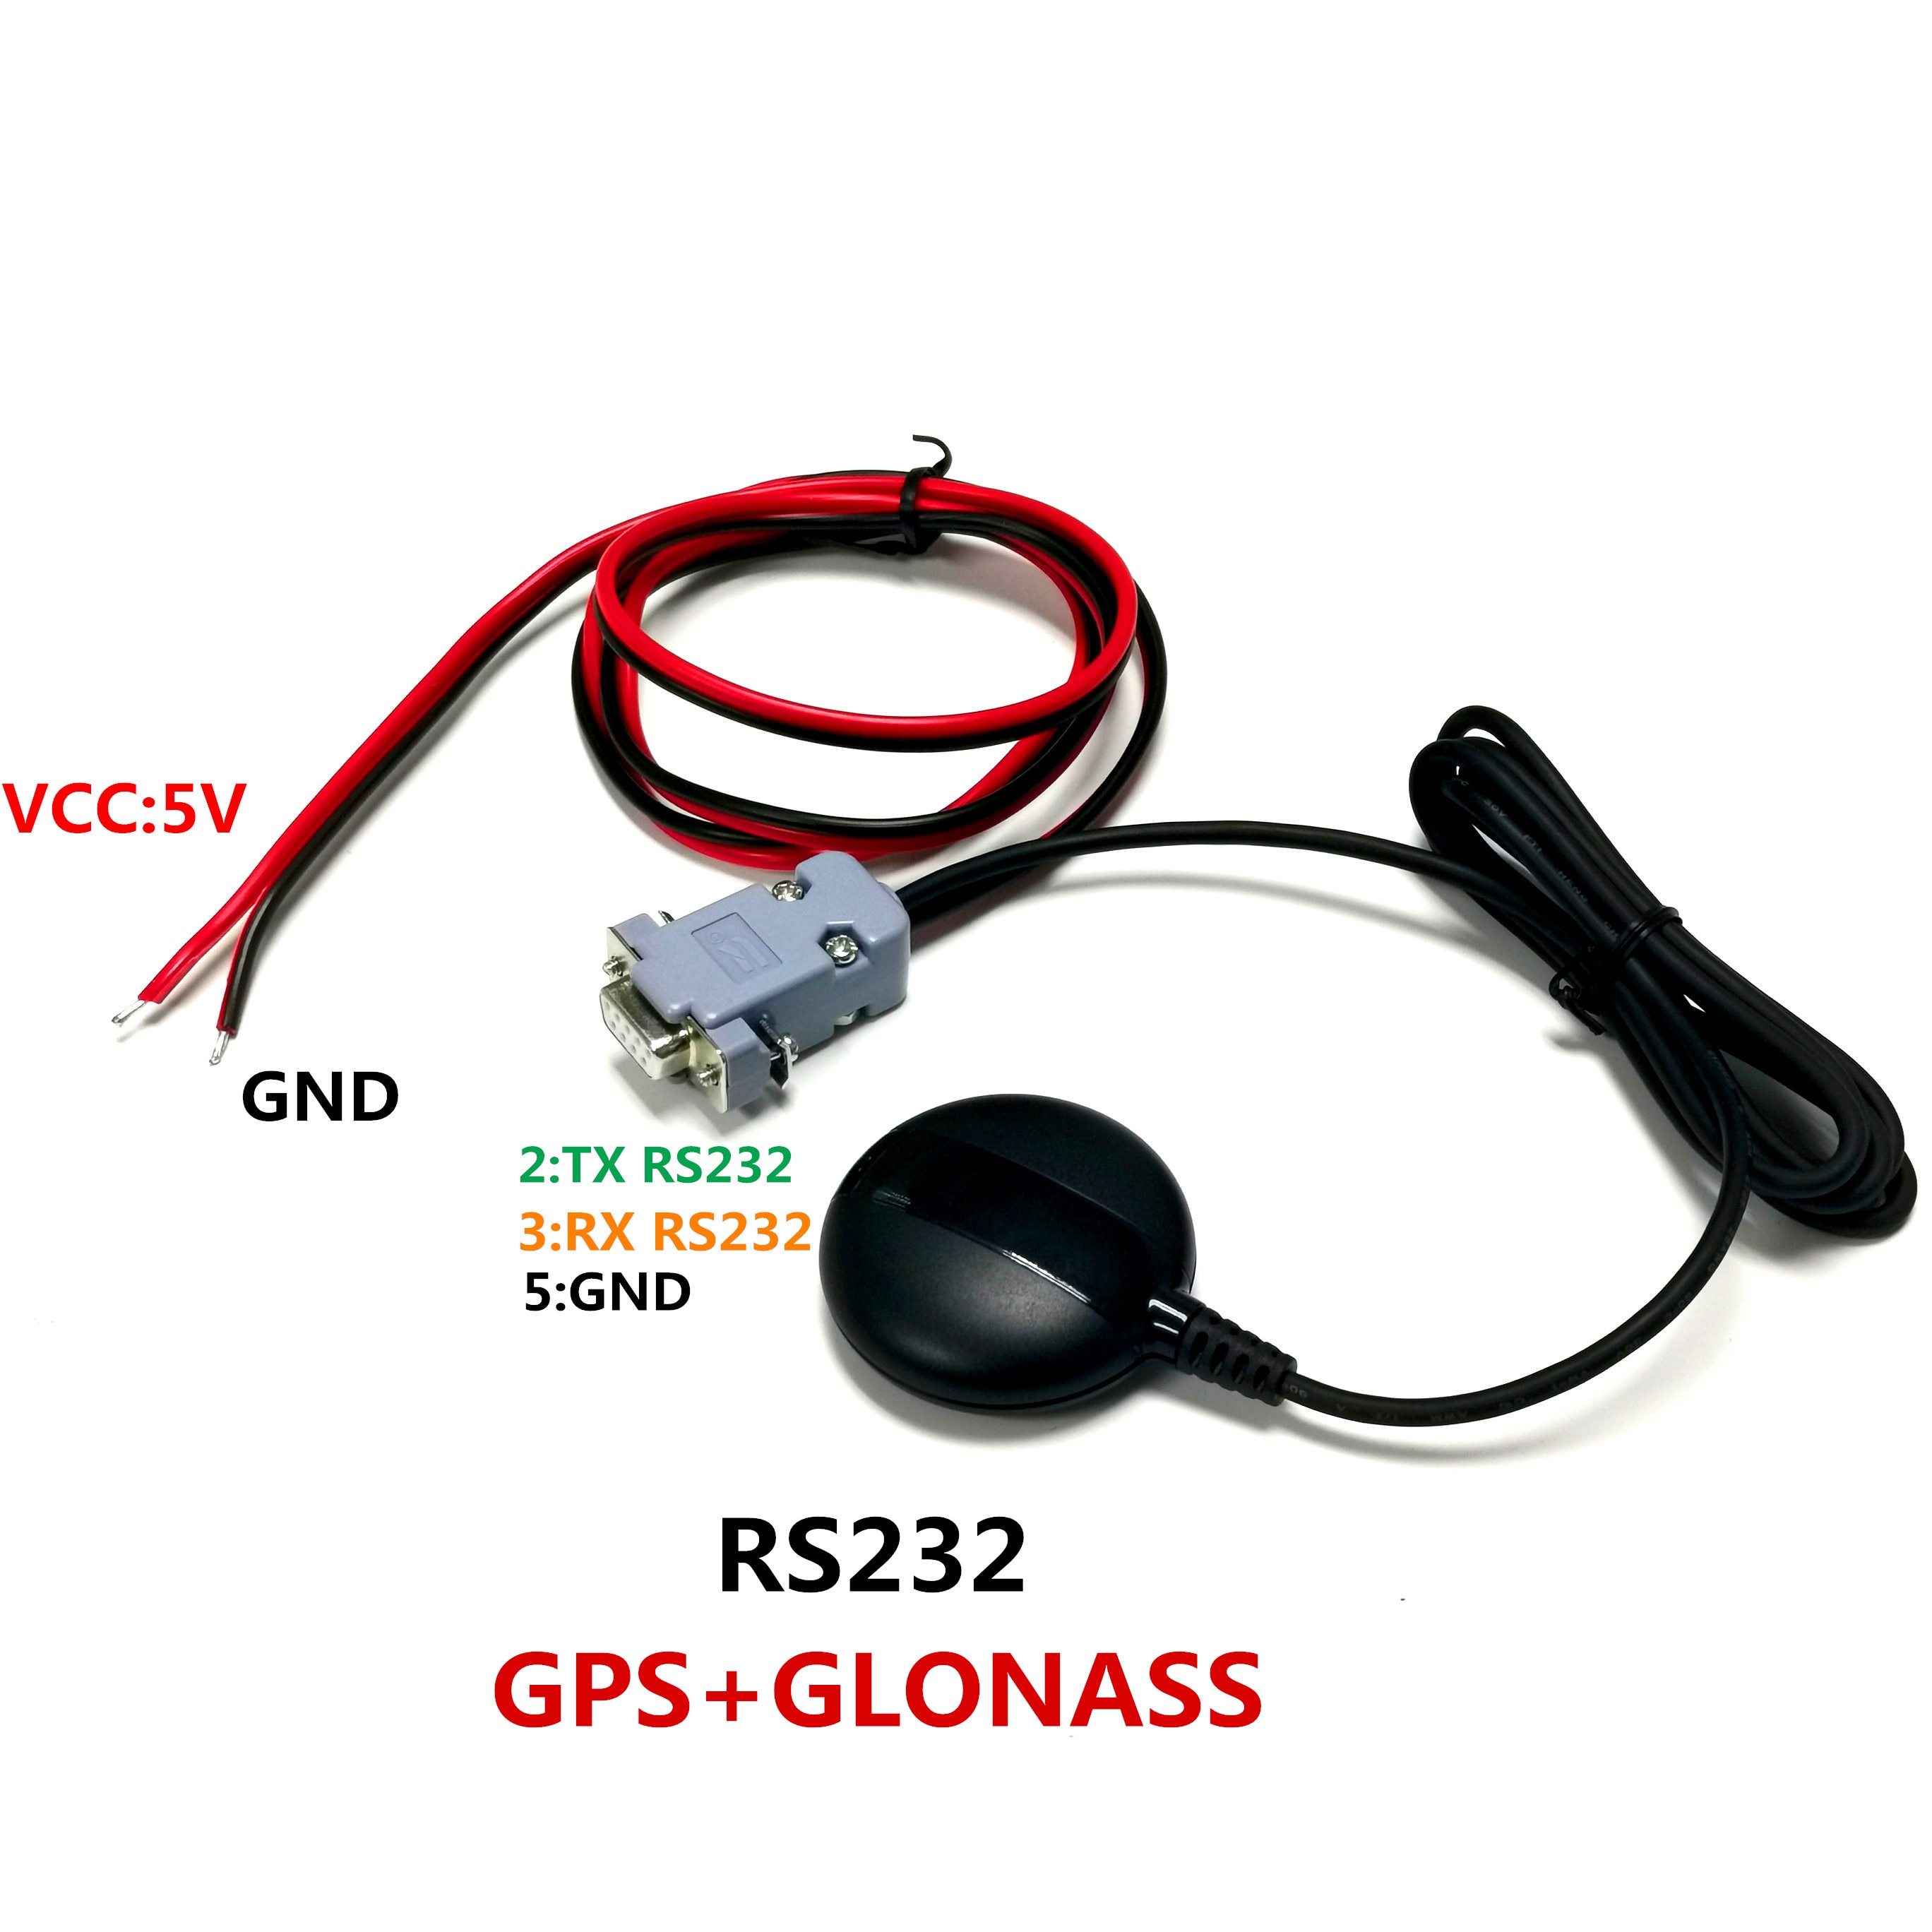 9600bps,NMEA-0183 ,5.0V RS-232 Niveau DB9 Vrouwelijke Connector RS232 Gps Glonass Ontvanger, Protocol RS232,4M Flash Topgnss